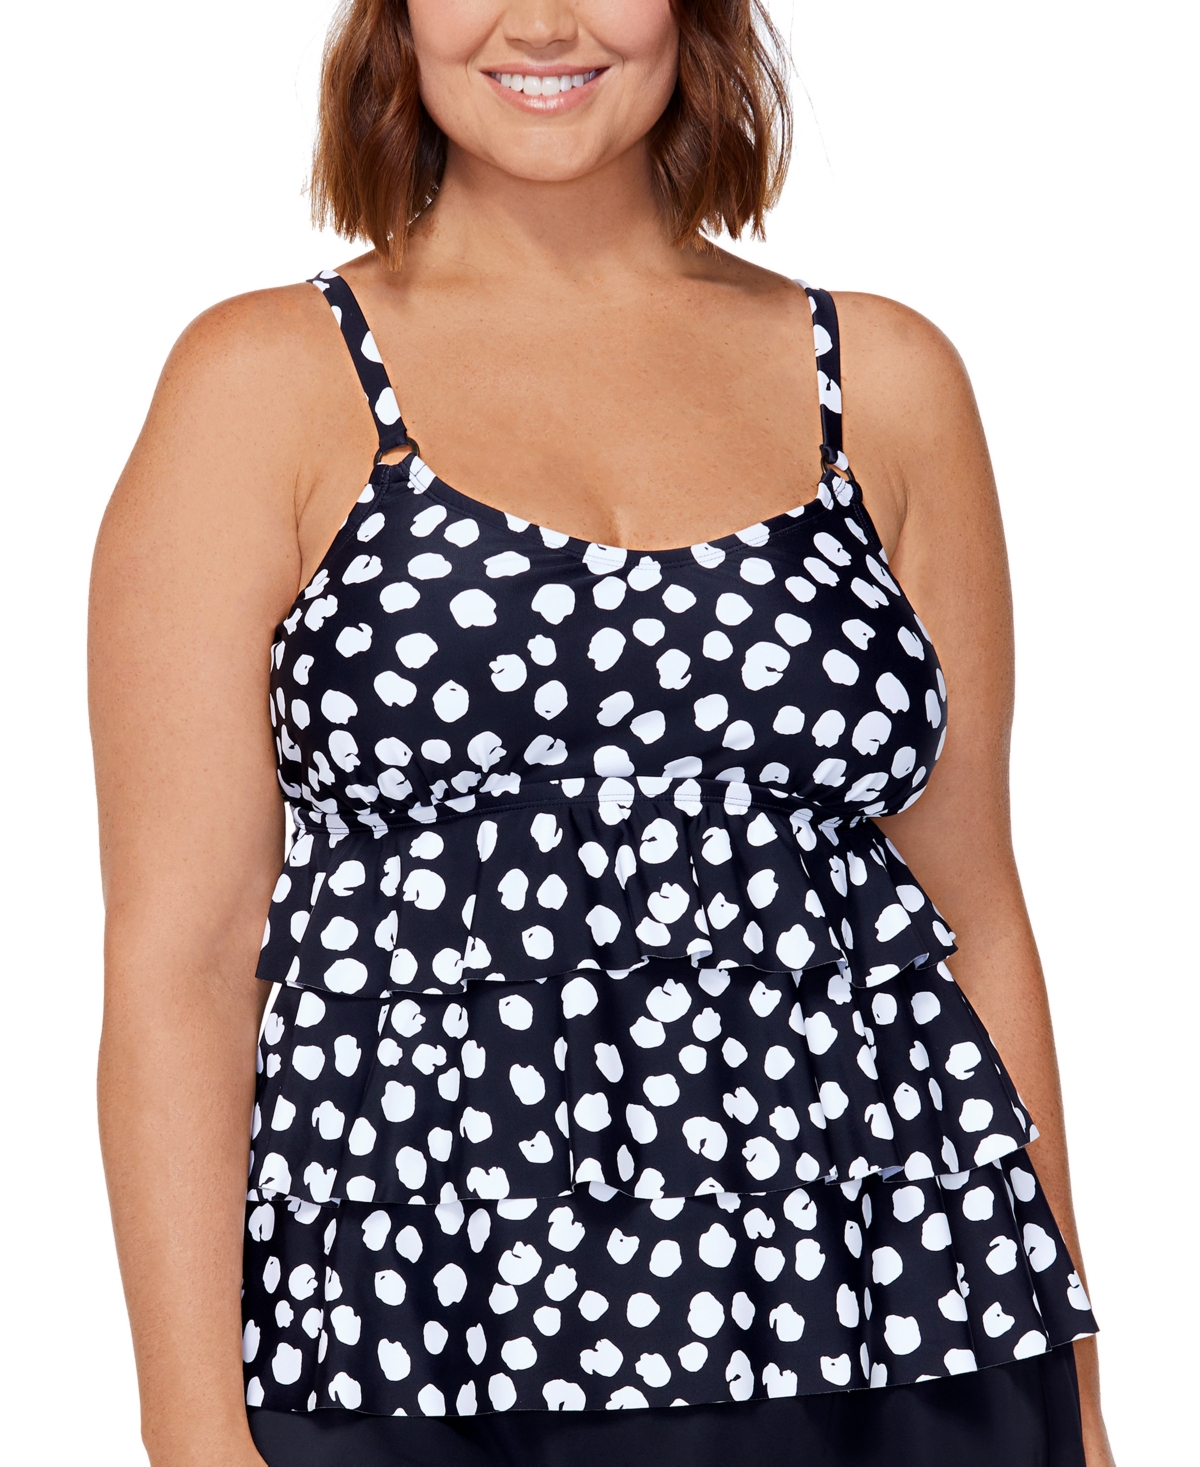 Island Escape Plus Size Printed Triple-Tiered Underwire Tankini Swim Top, Created for Macy's Women's Swimsuit